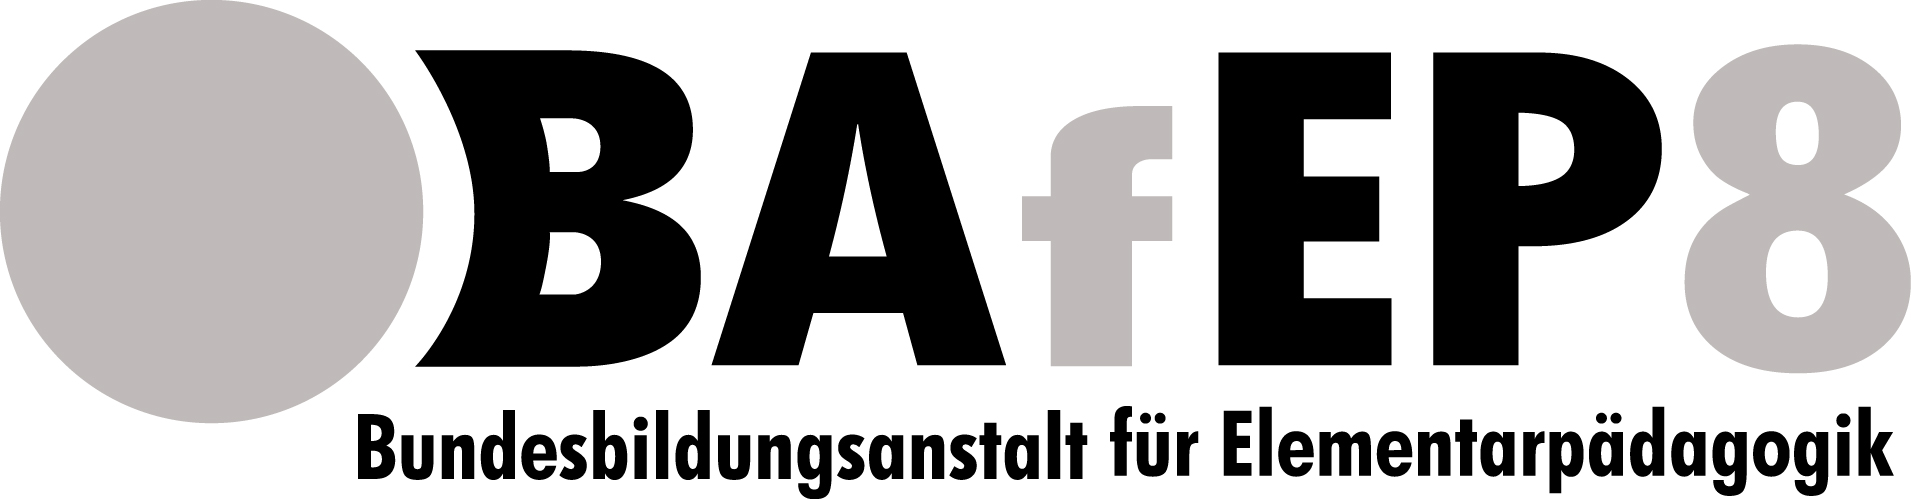 Logo BAfEP8 Elementarpädagogik